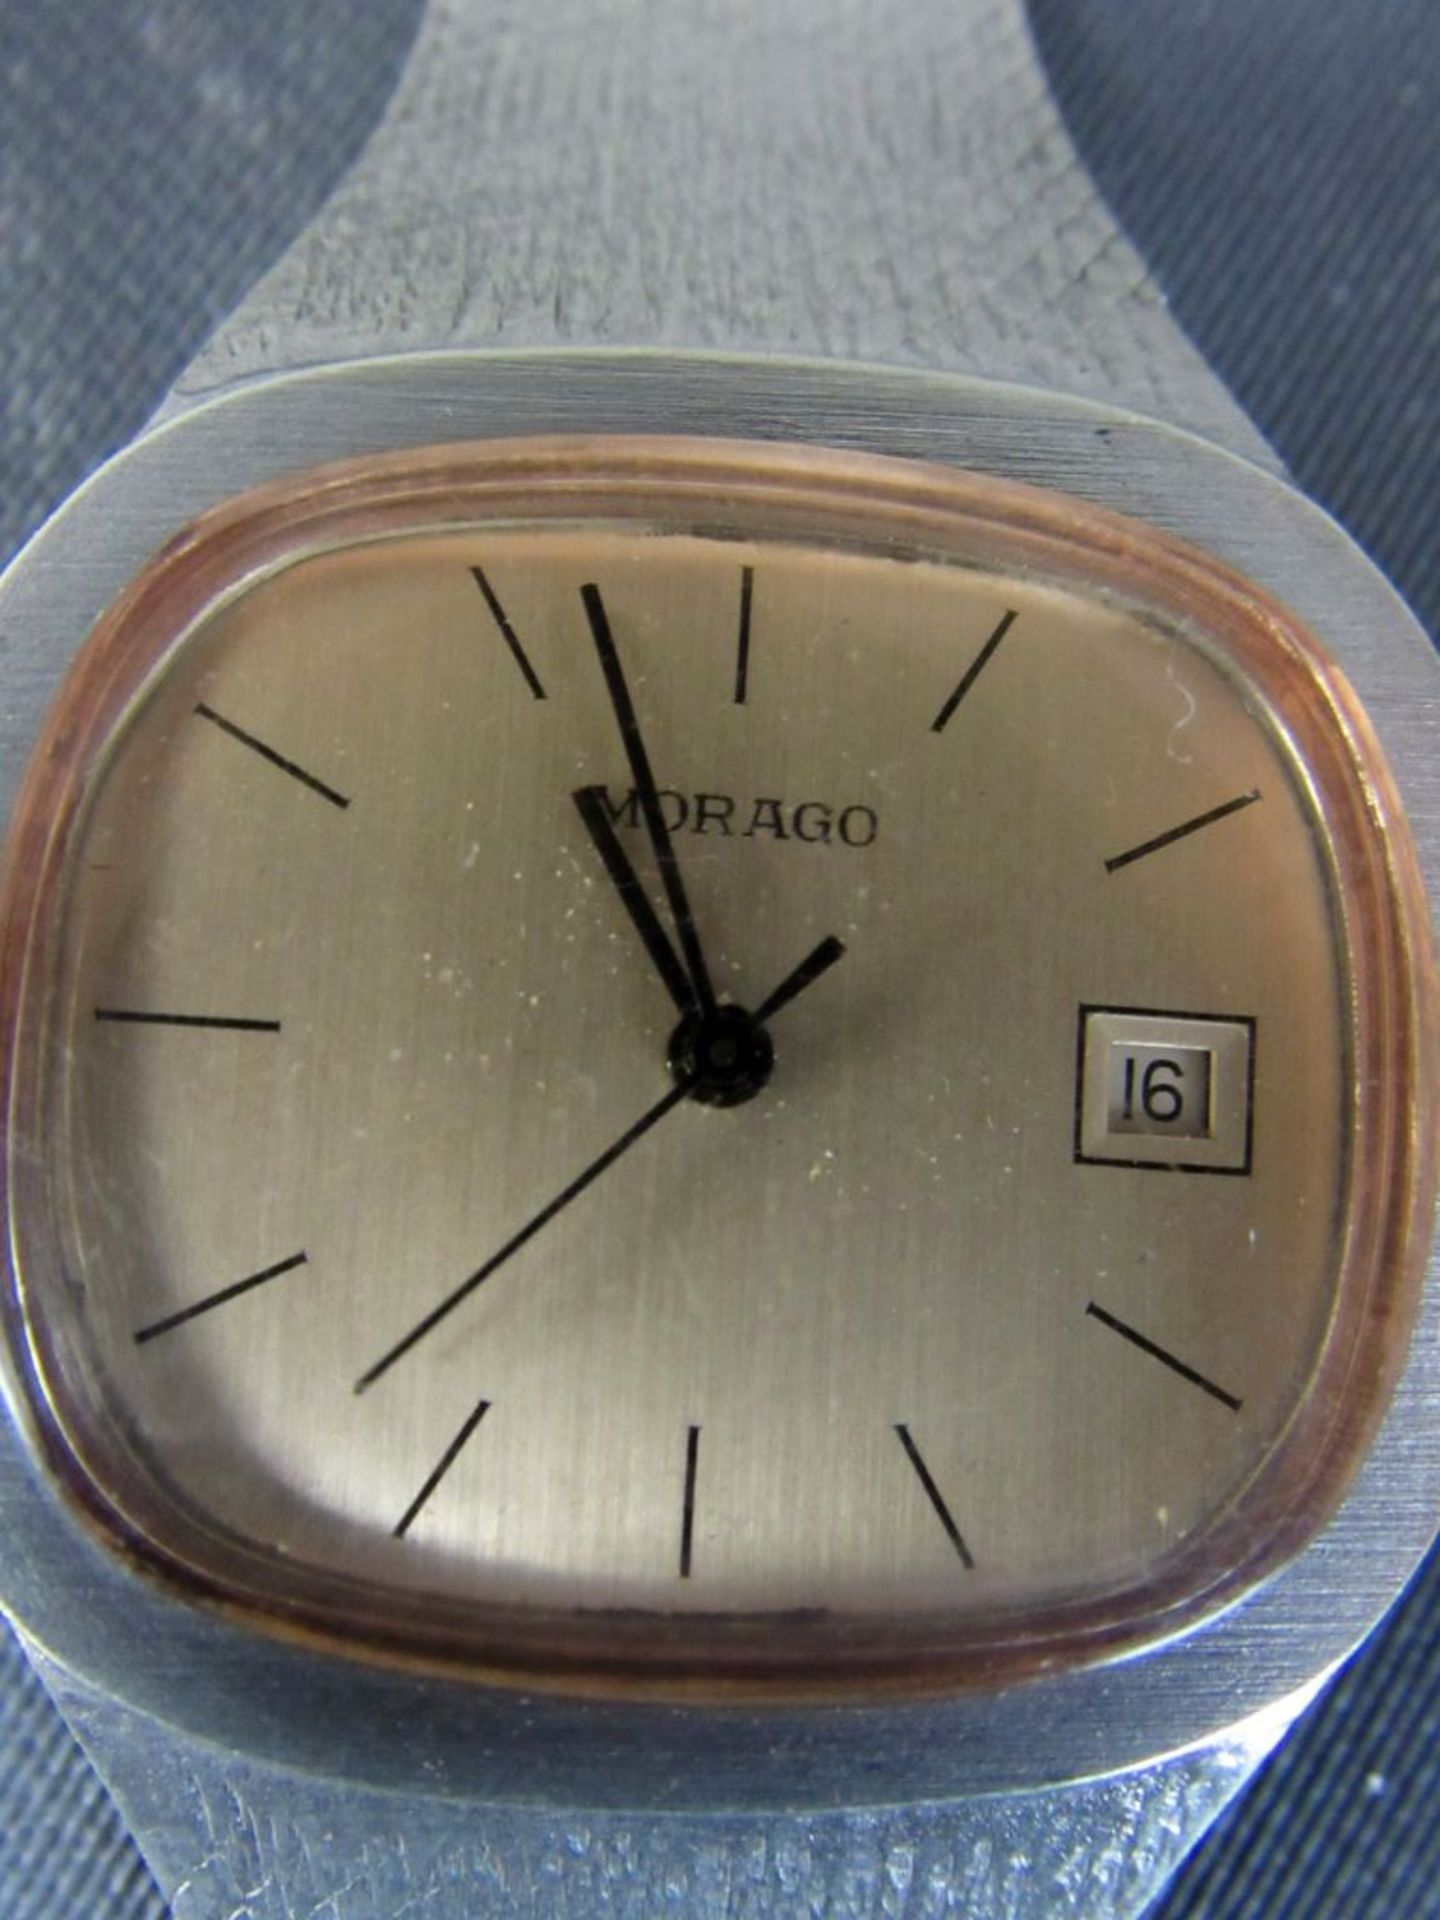 Damen Uhr 800er Silber Morago läuft an - Image 5 of 10